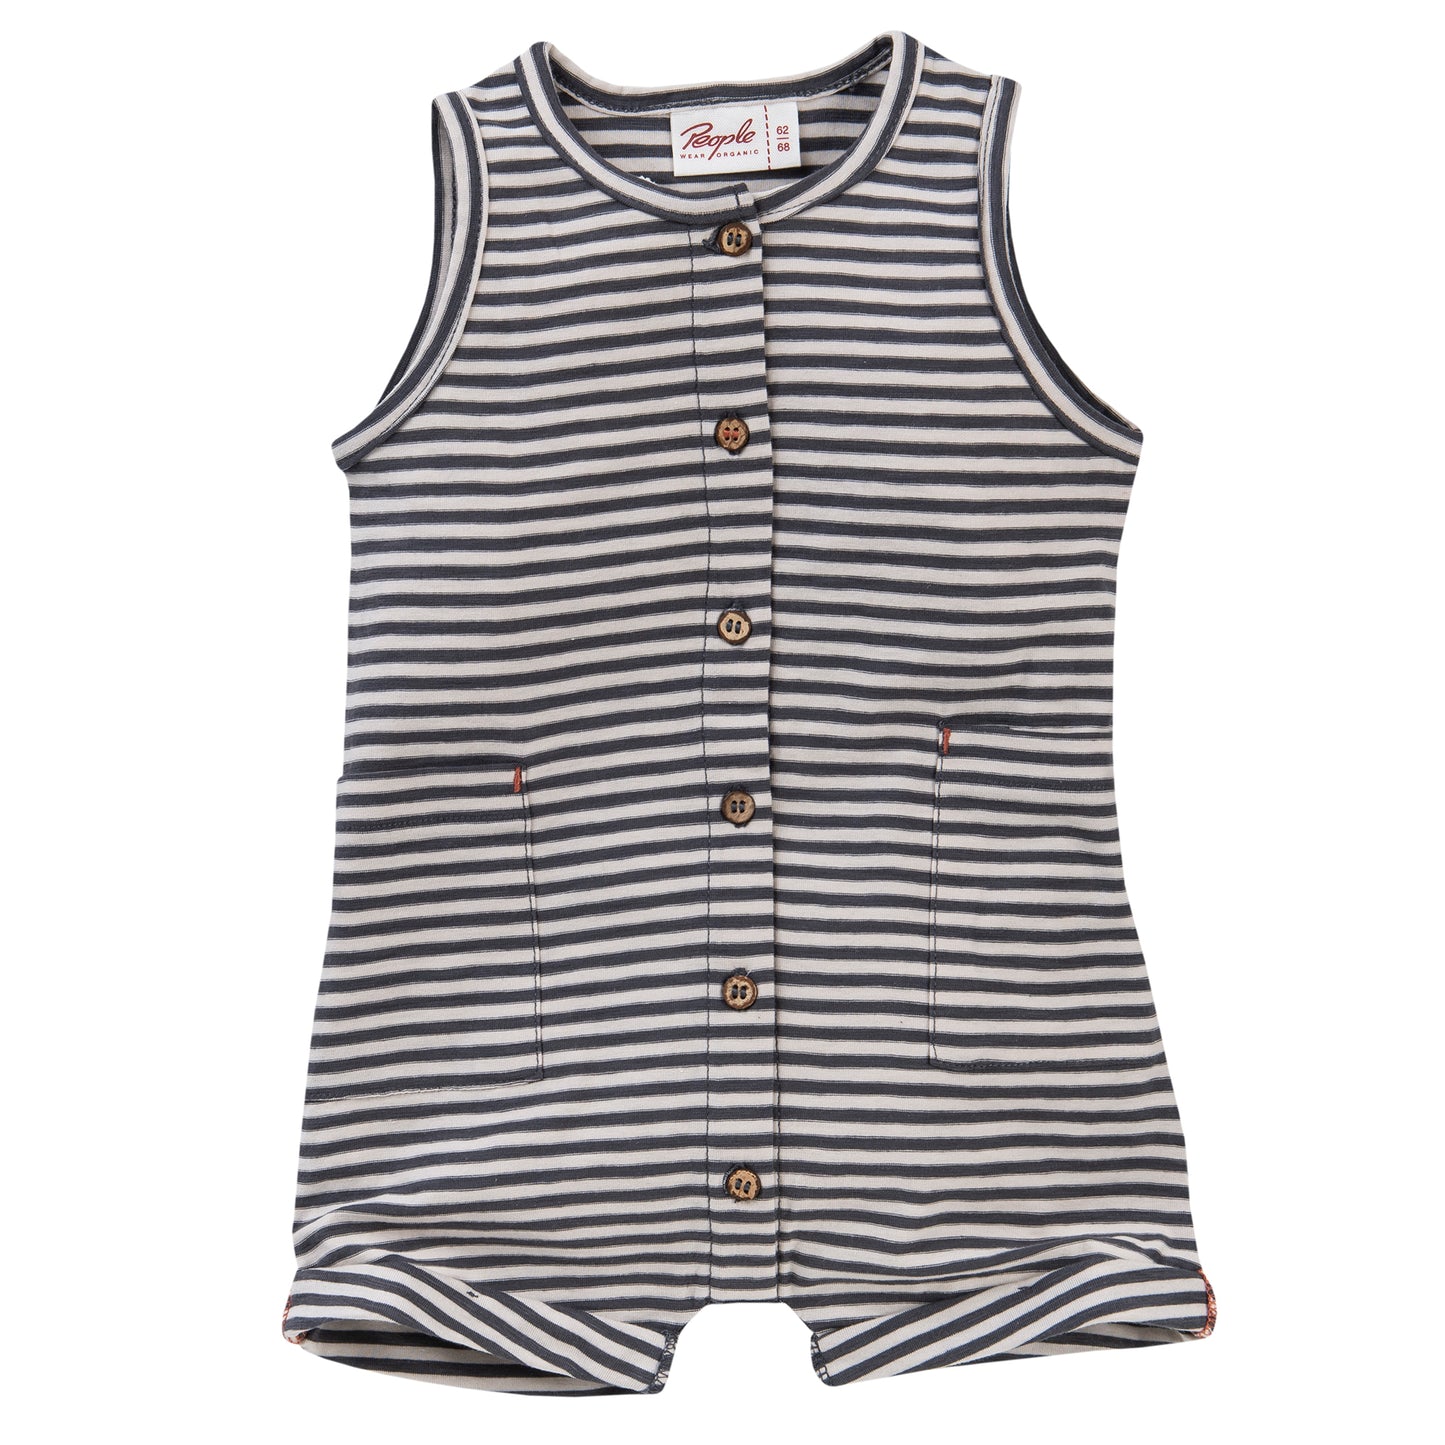 Slate-Grey Striped Sleeveless Baby & Toddler Shortie Romper | GOTS Organic Cotton